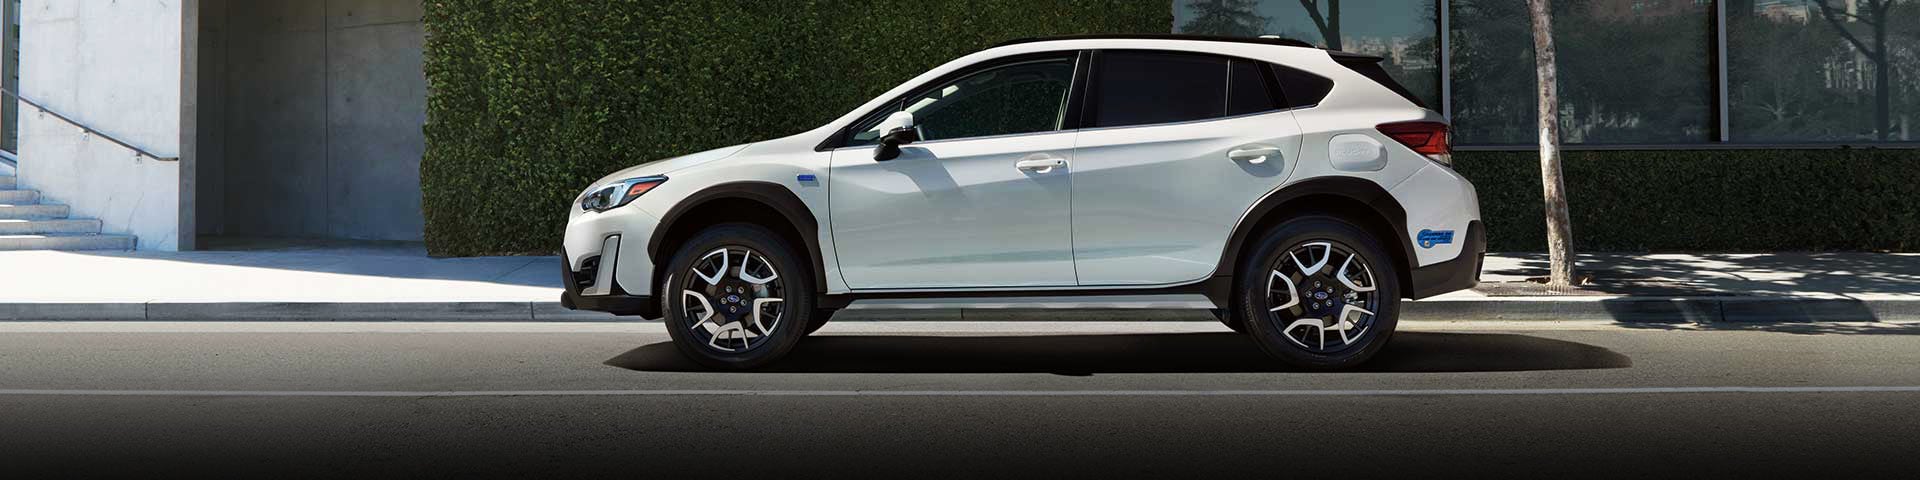 The side profile of a white Subaru Crosstrek Hybrid | River City Subaru in Huntington WV